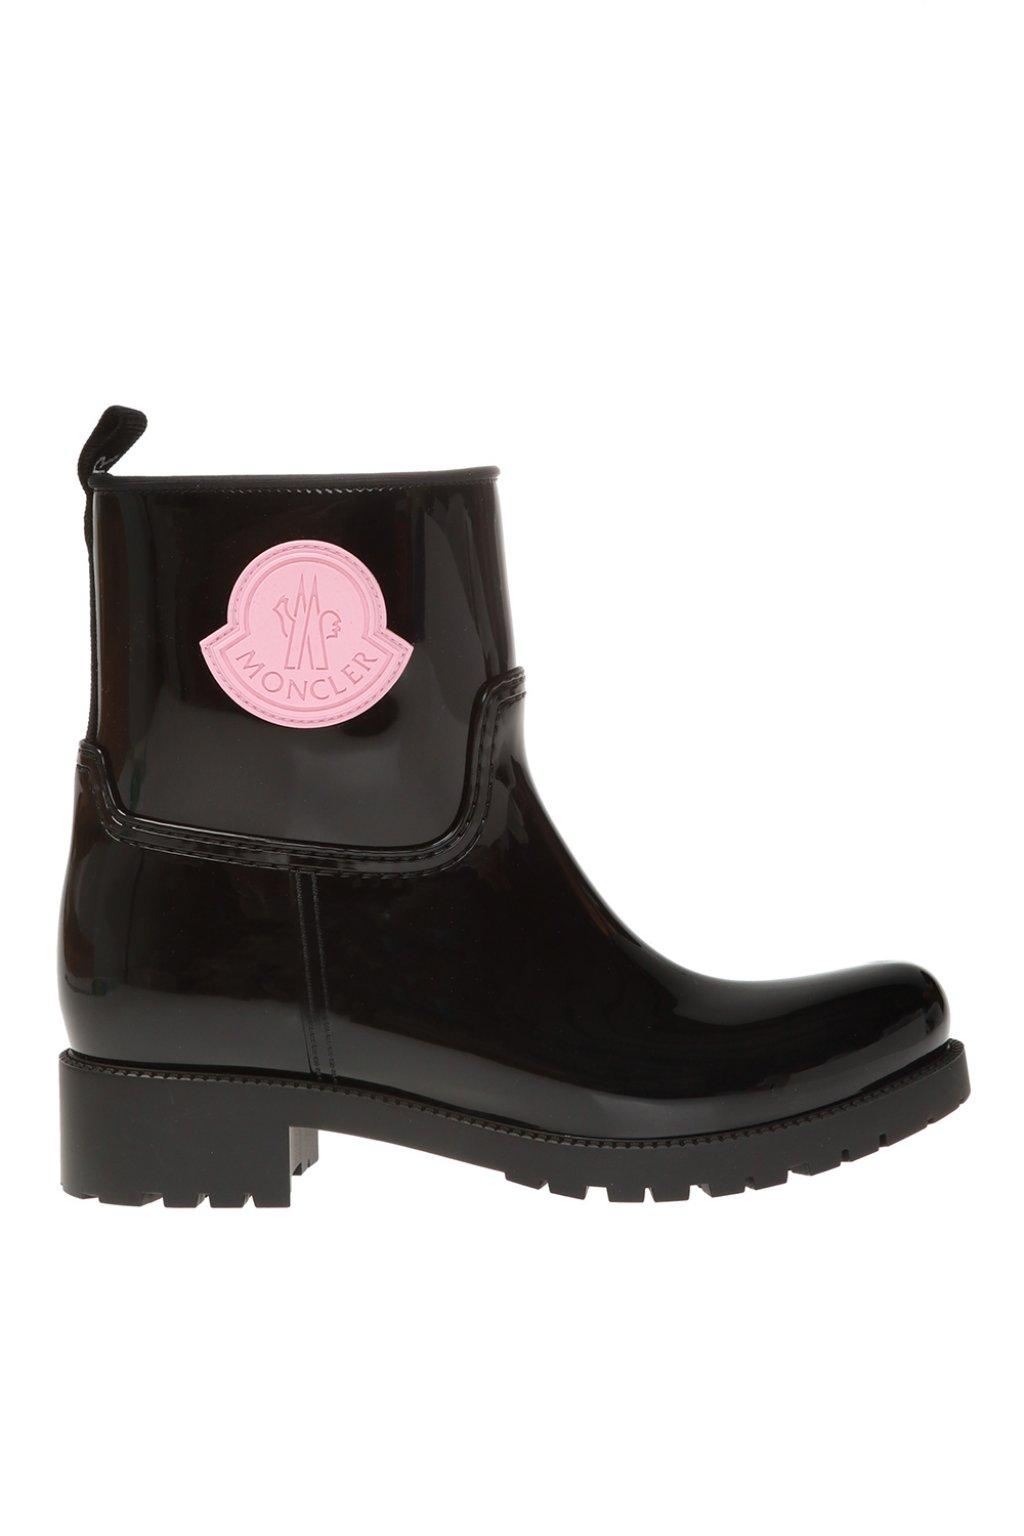 Moncler Ginette Logo Waterproof Rain Boot in Black | Lyst